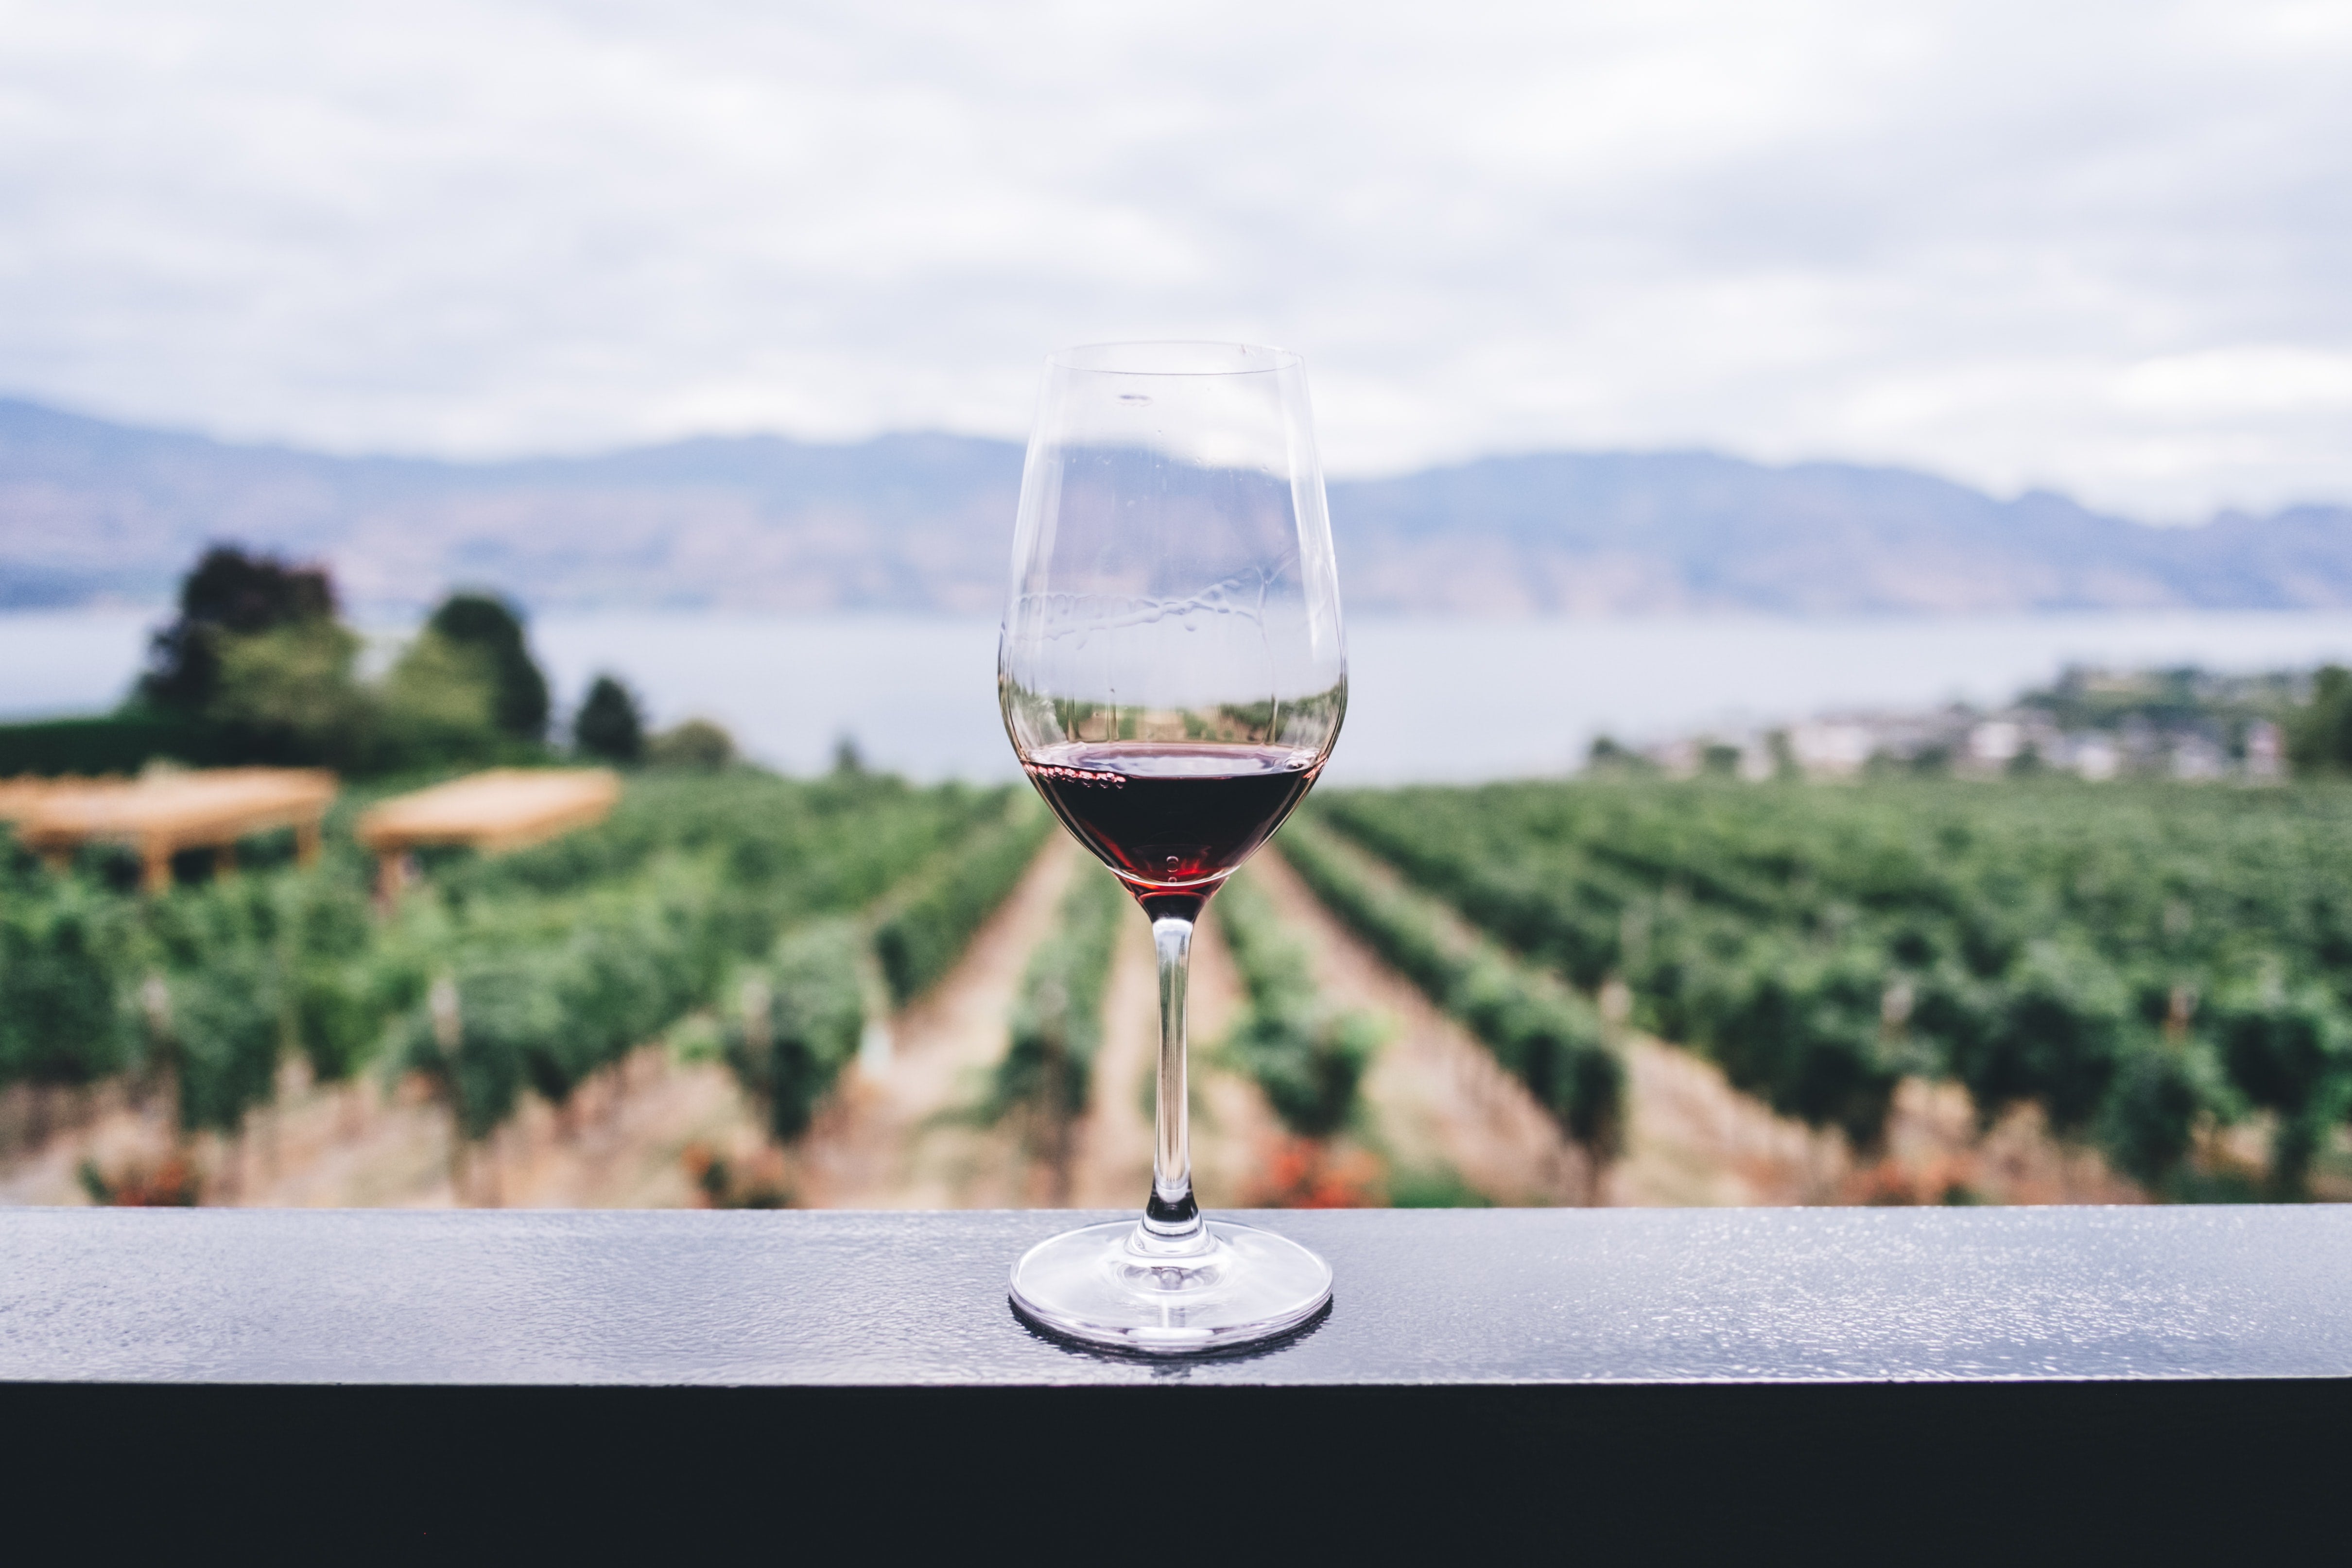 soil and taste of wine